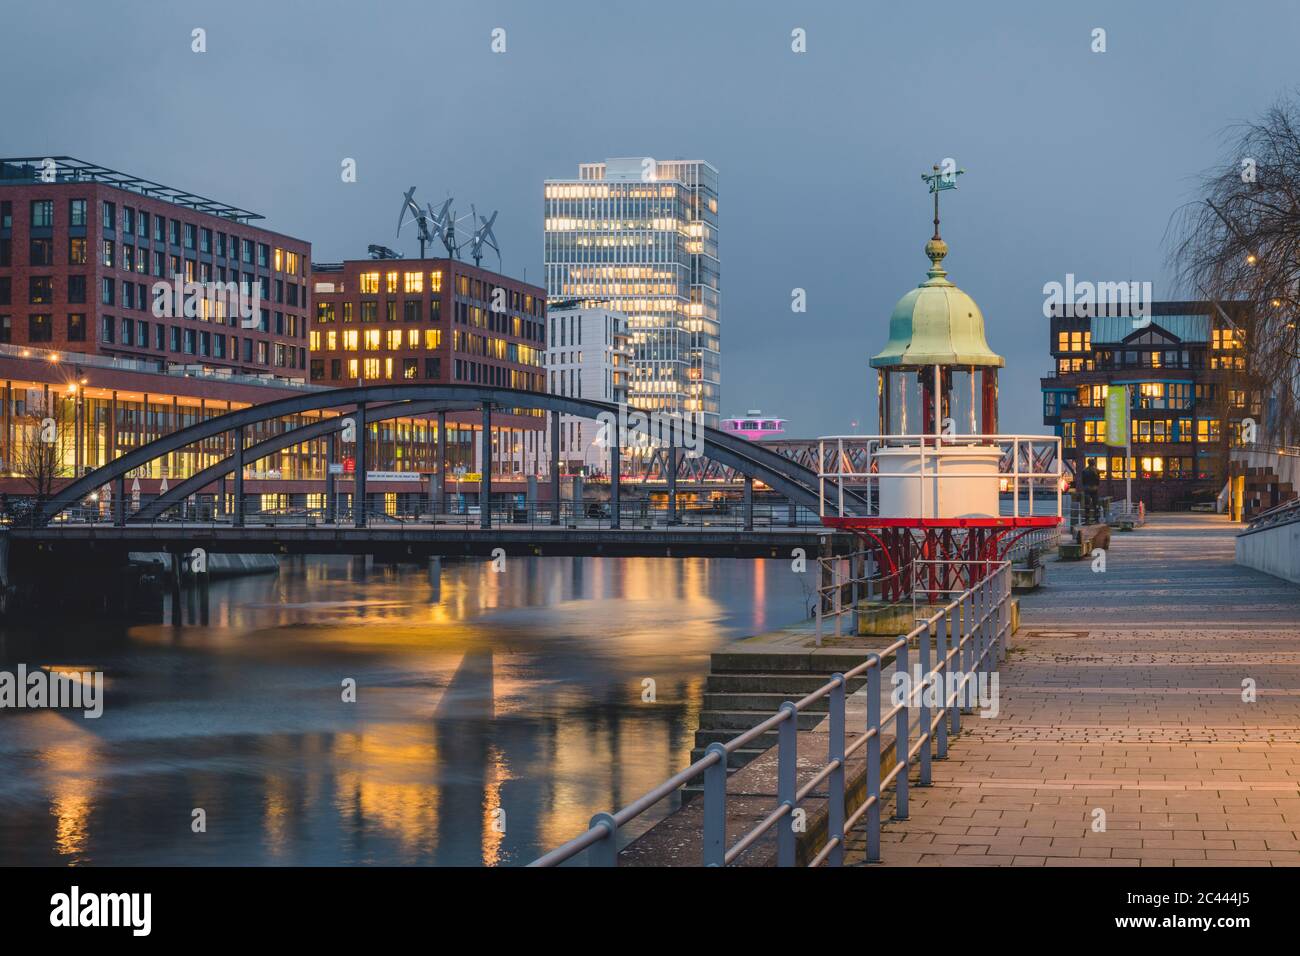 Germany, Hamburg, Bridge over Elbe river canal at dusk Stock Photo